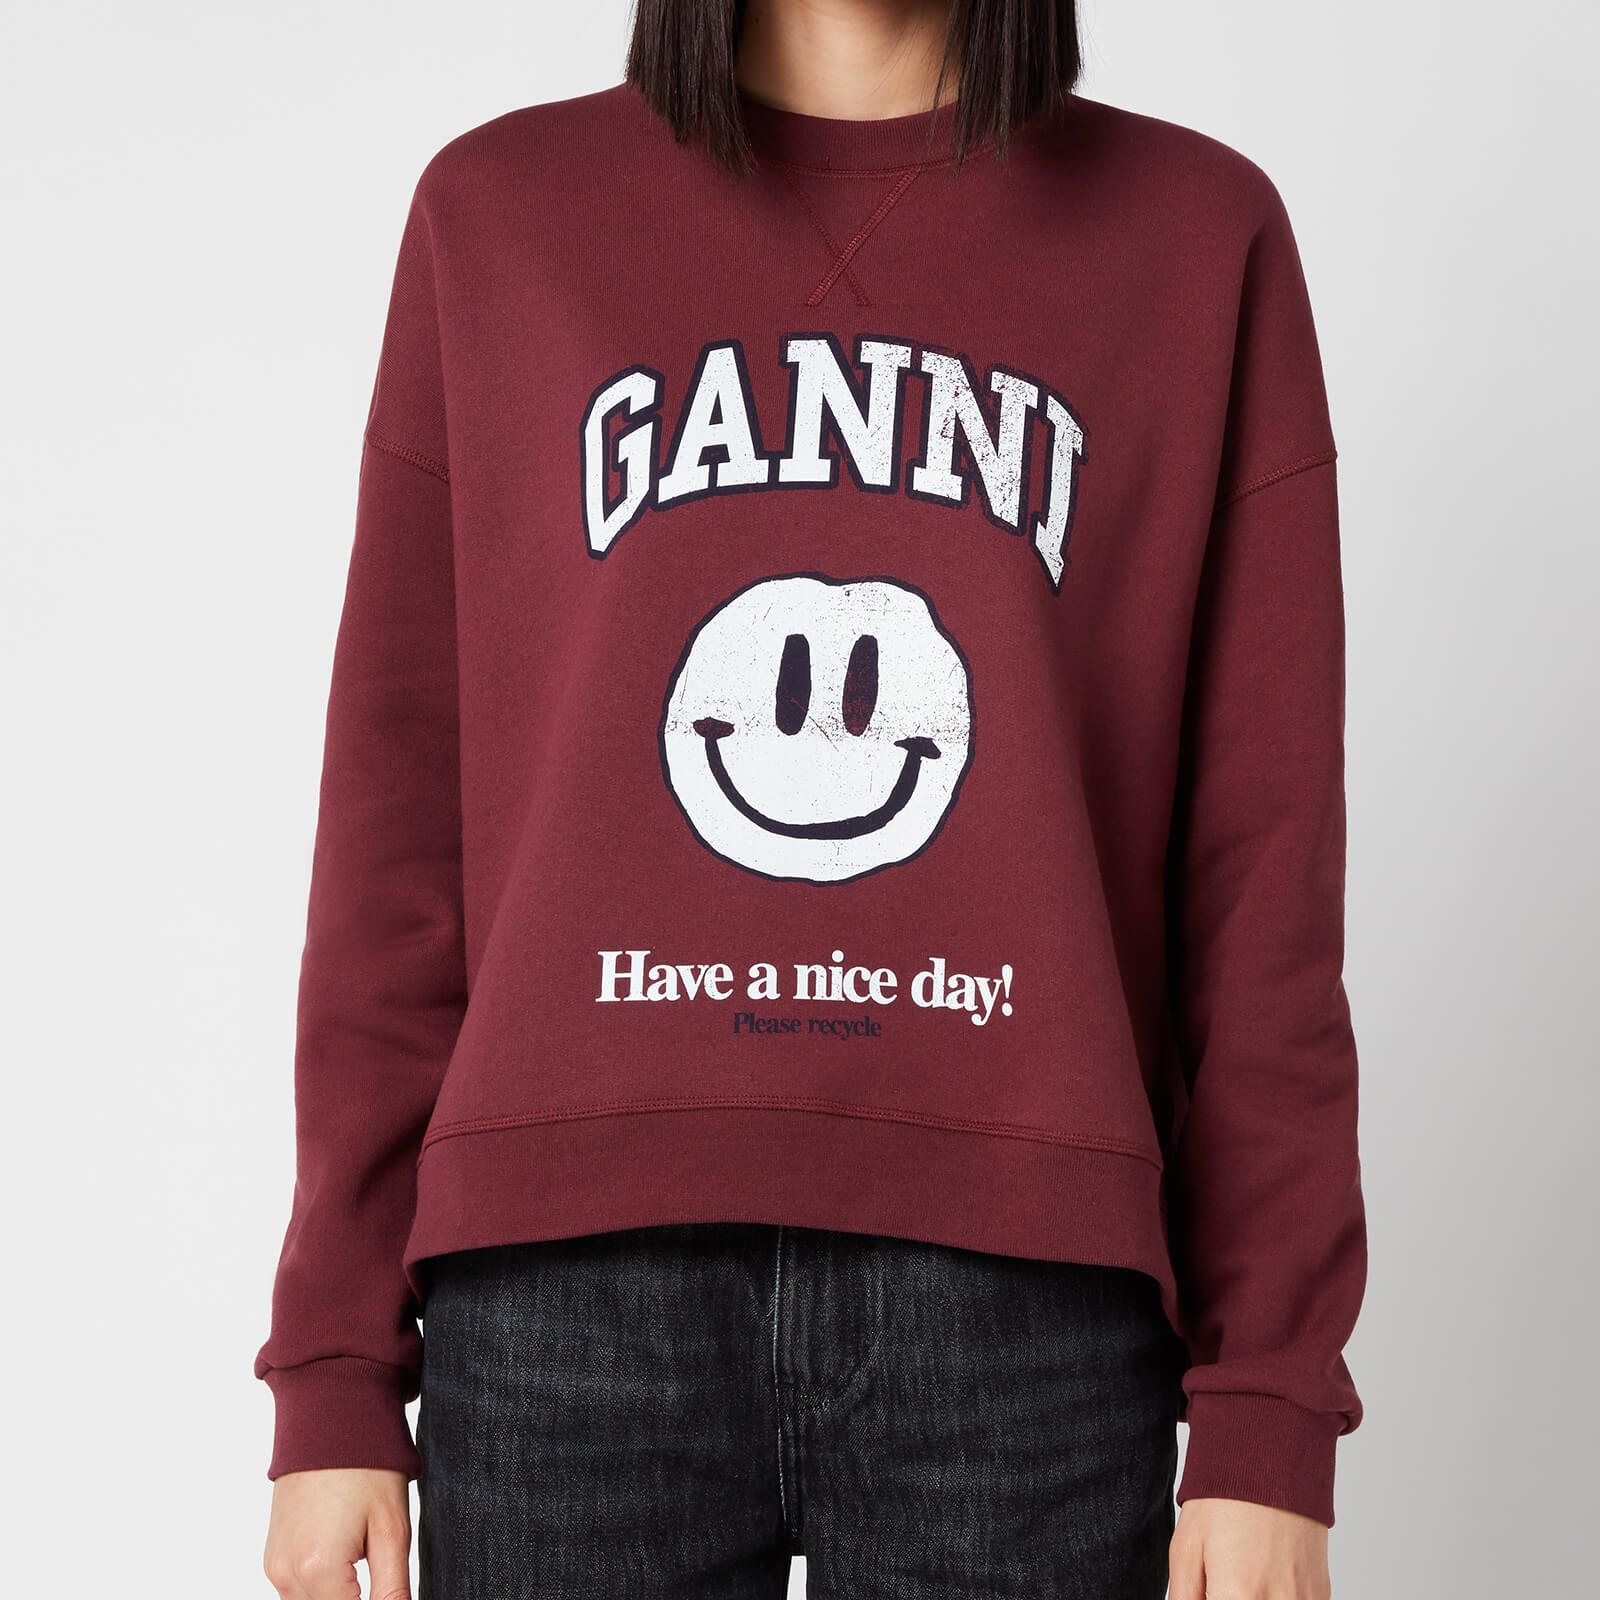 Ganni Women's Isoli Sweatshirt - Port Royale - L/XL